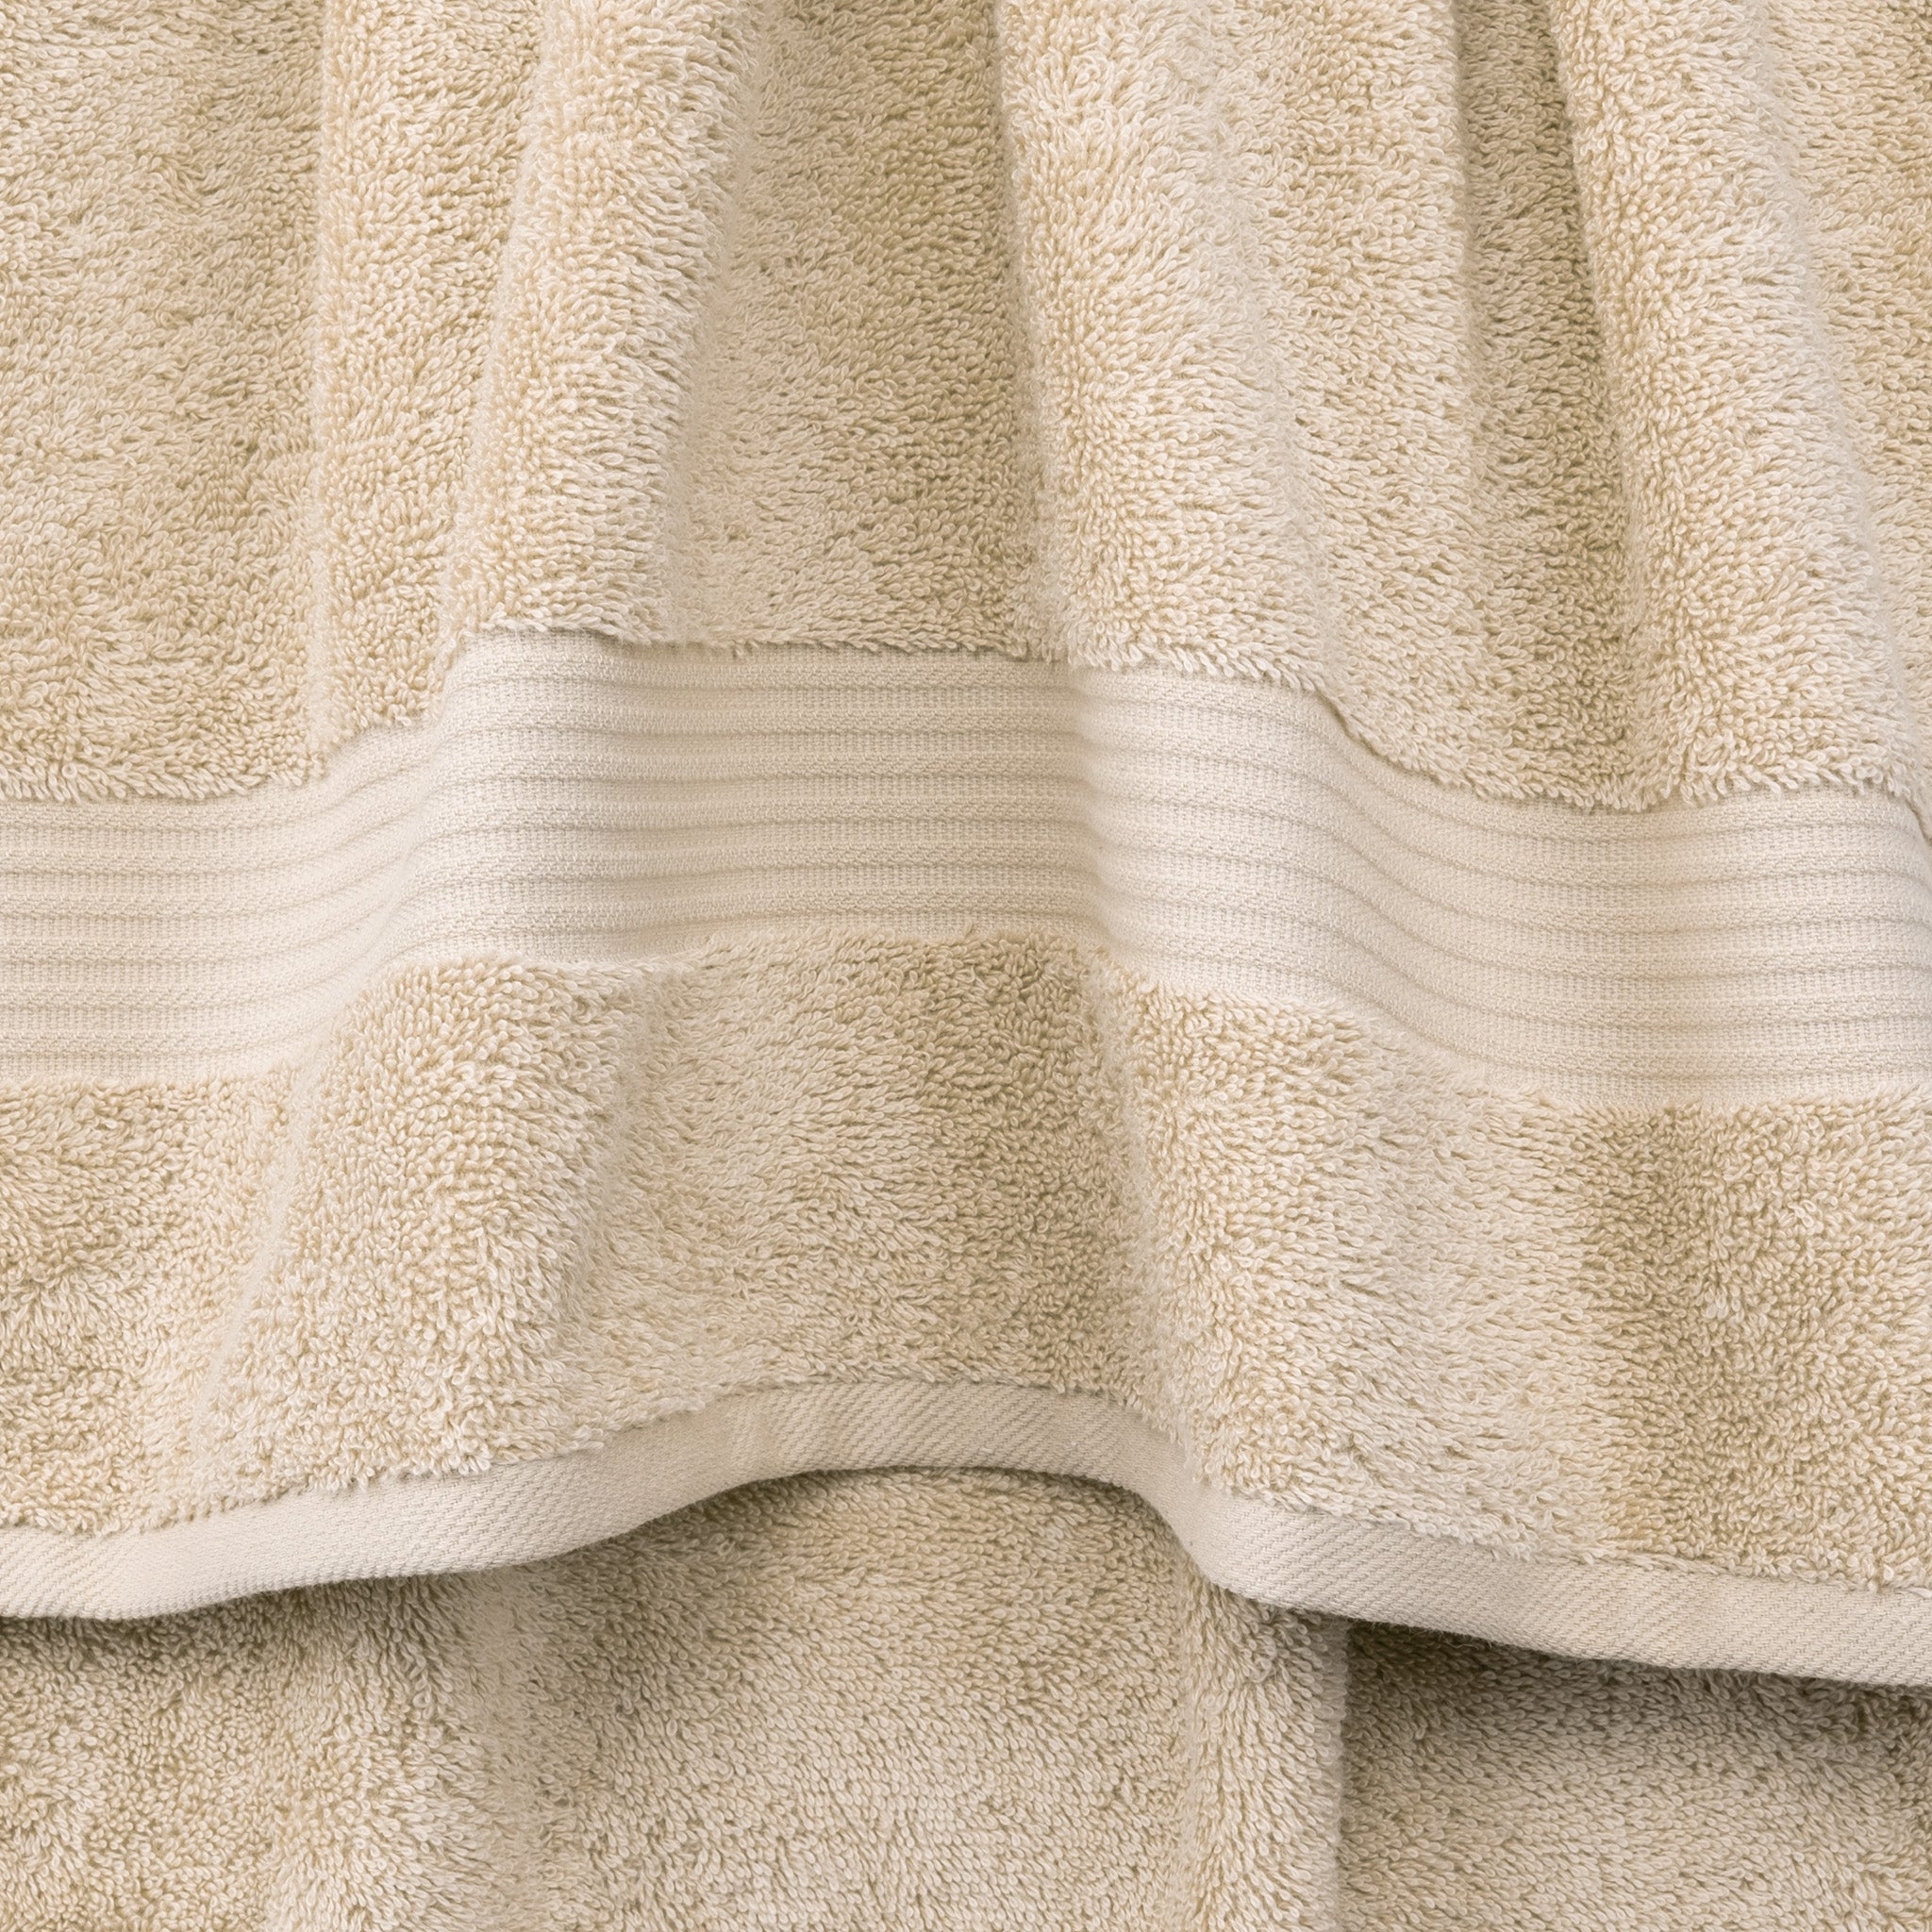 American Soft Linen Bekos 100% Cotton Turkish Towels, 4 Piece Washcloth Towel Set -sand-taupe-04